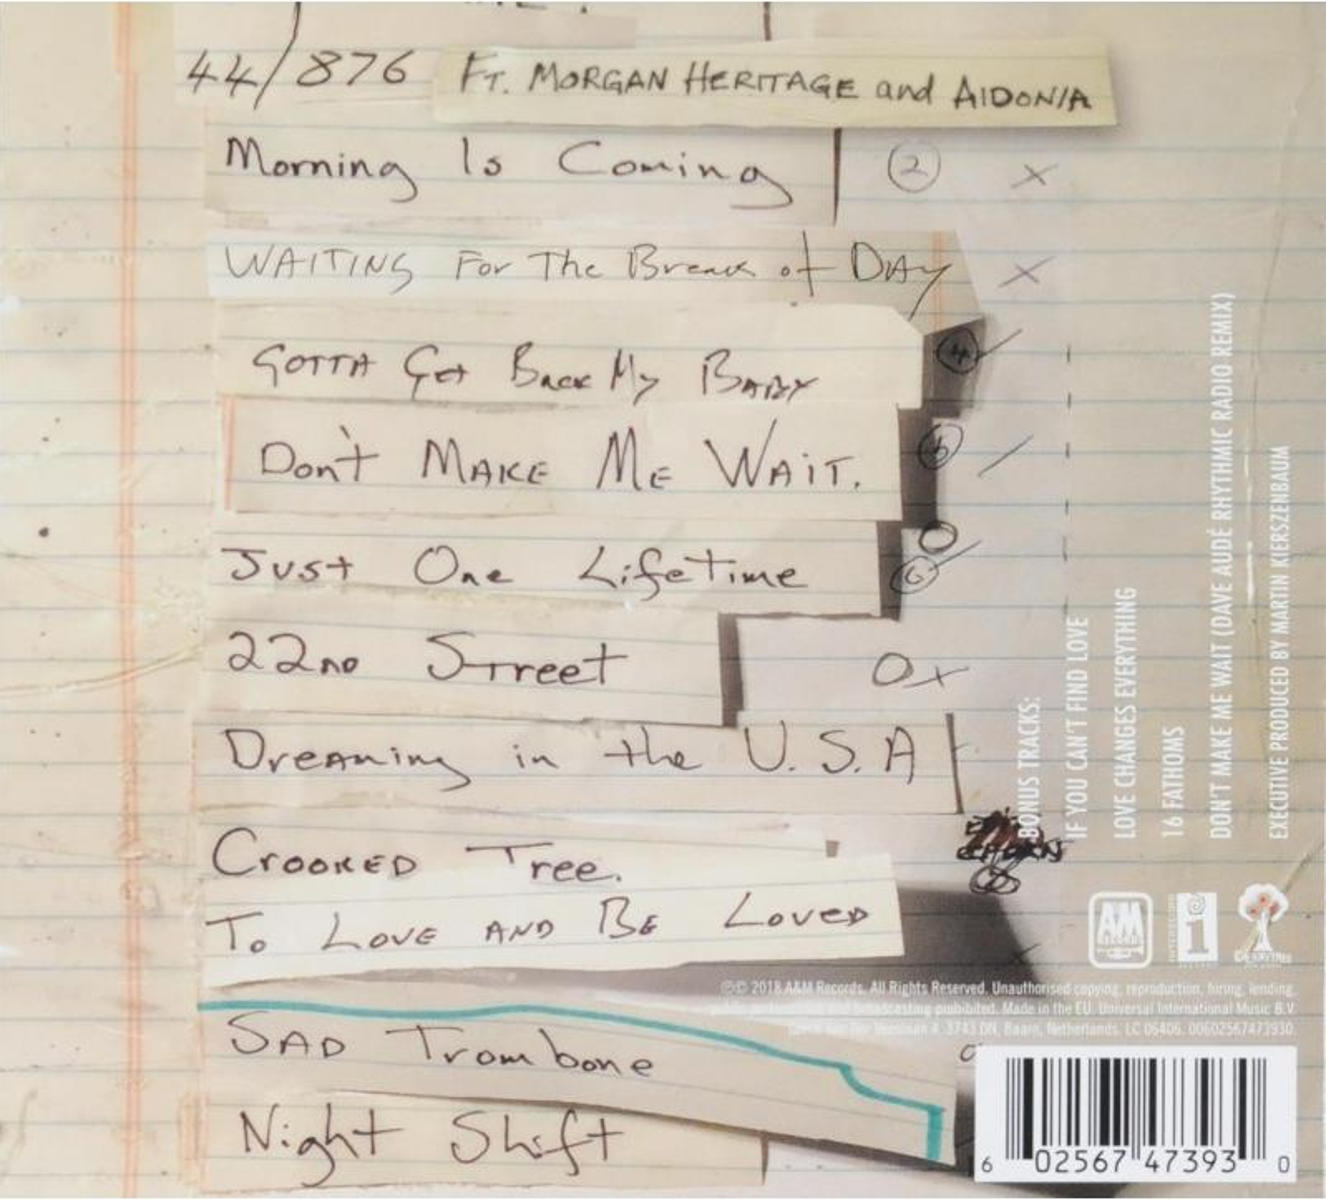 Shaggy (Ltd.Deluxe Edt.) - & (CD) Sting 44/876 -